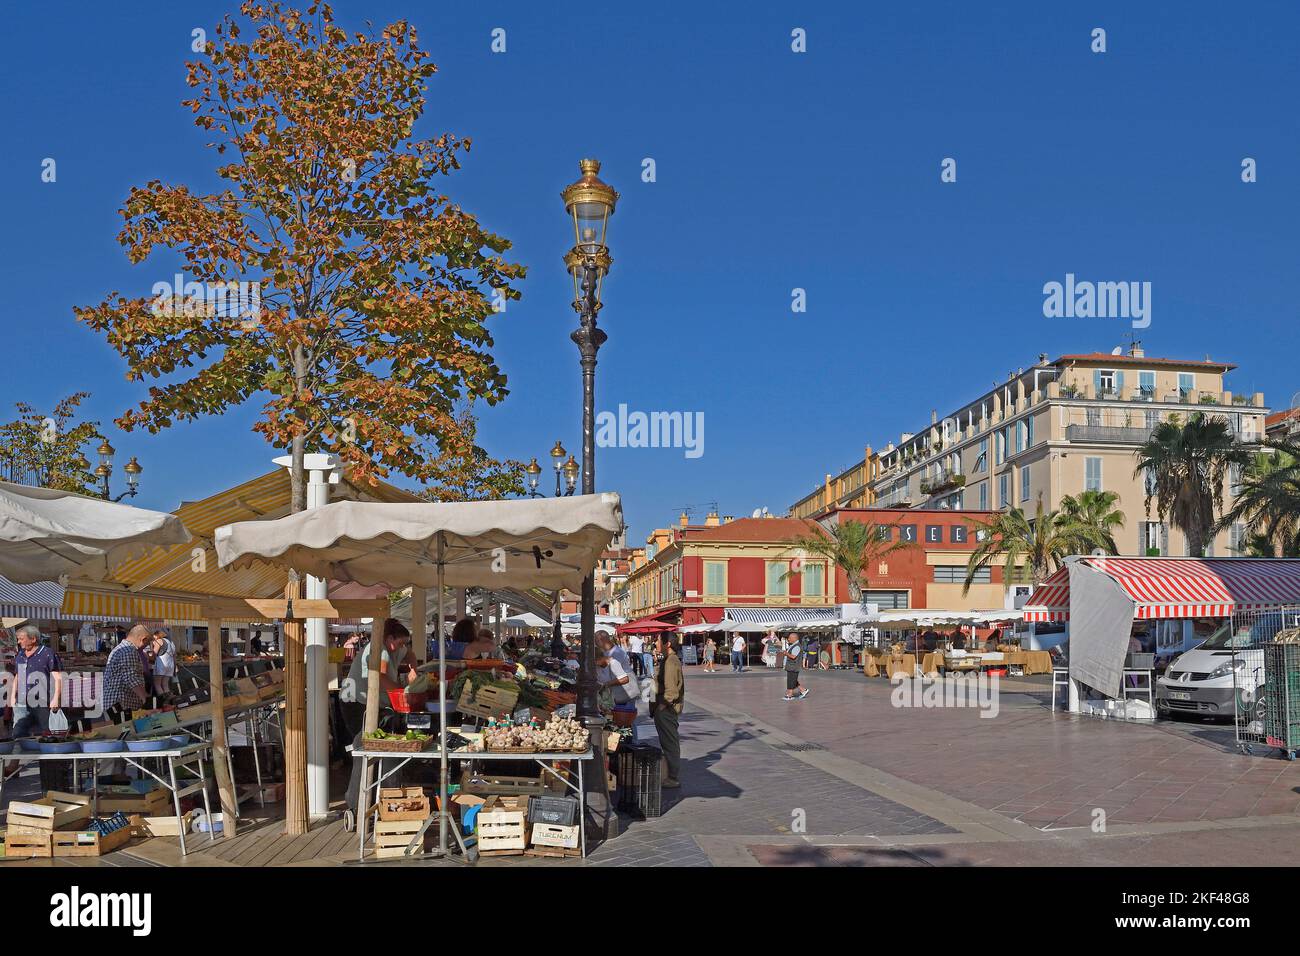 Markt auf dem Cours Saleya, Innenstadt, Nizza, Département Alpes-Maritimes, Region Provence-Alpes-Côte d’Azur, Frankreich Stockfoto